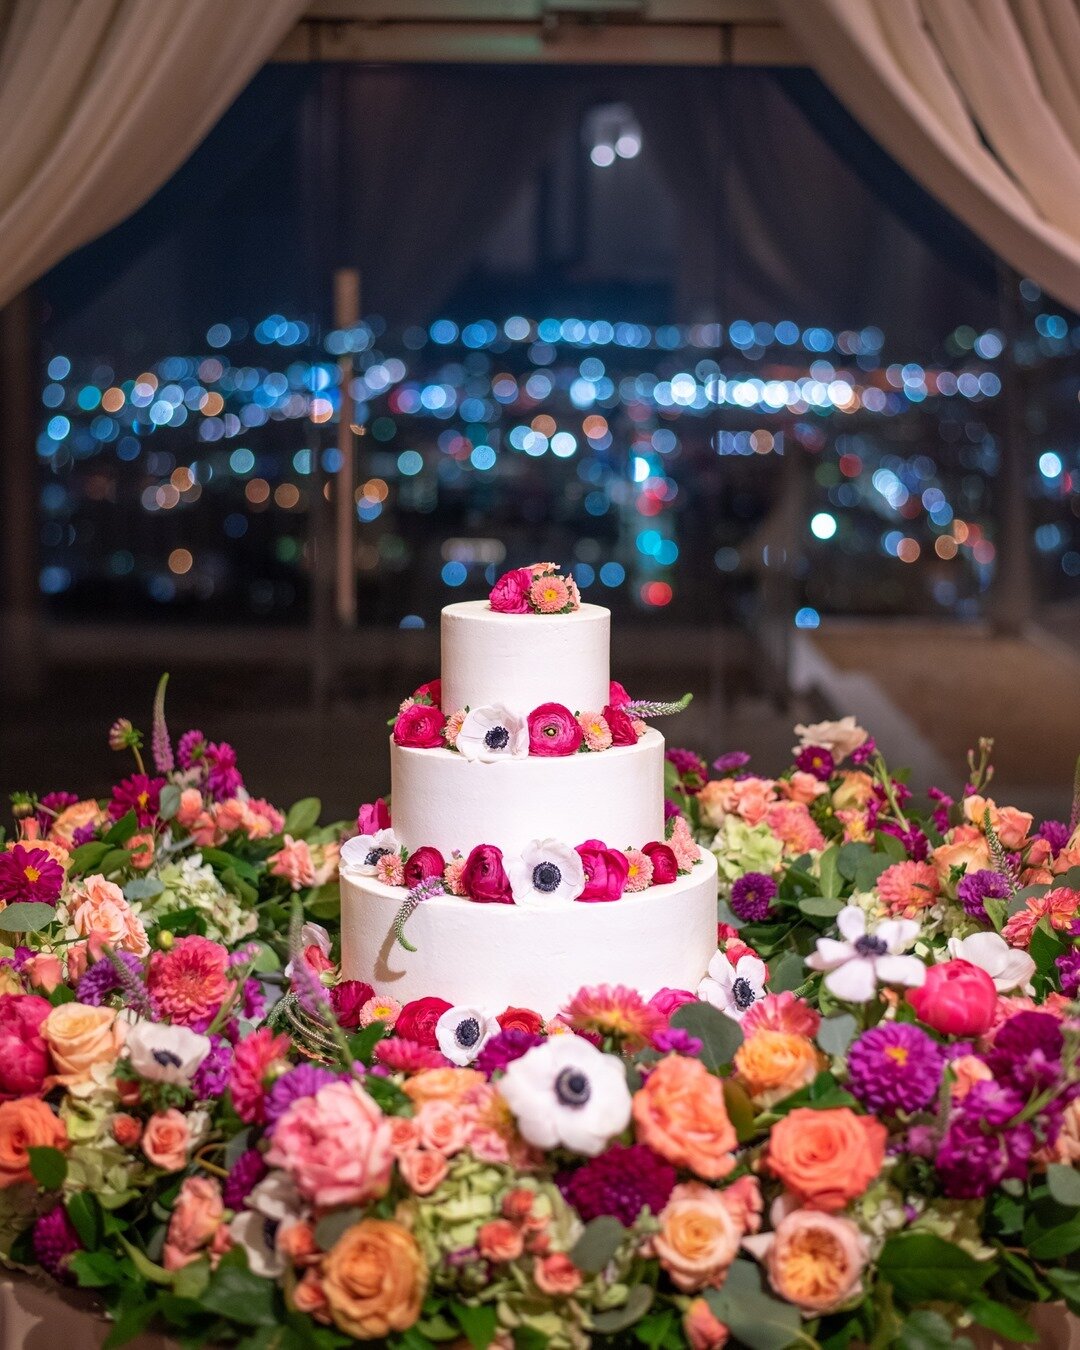 That view. That cake. Those flowers.  #flowerpower#flowerlovers #flowermagic #wedding #flowers #weddingflowers #callmarigold #dontwaitocelebrate #marigoldwedding